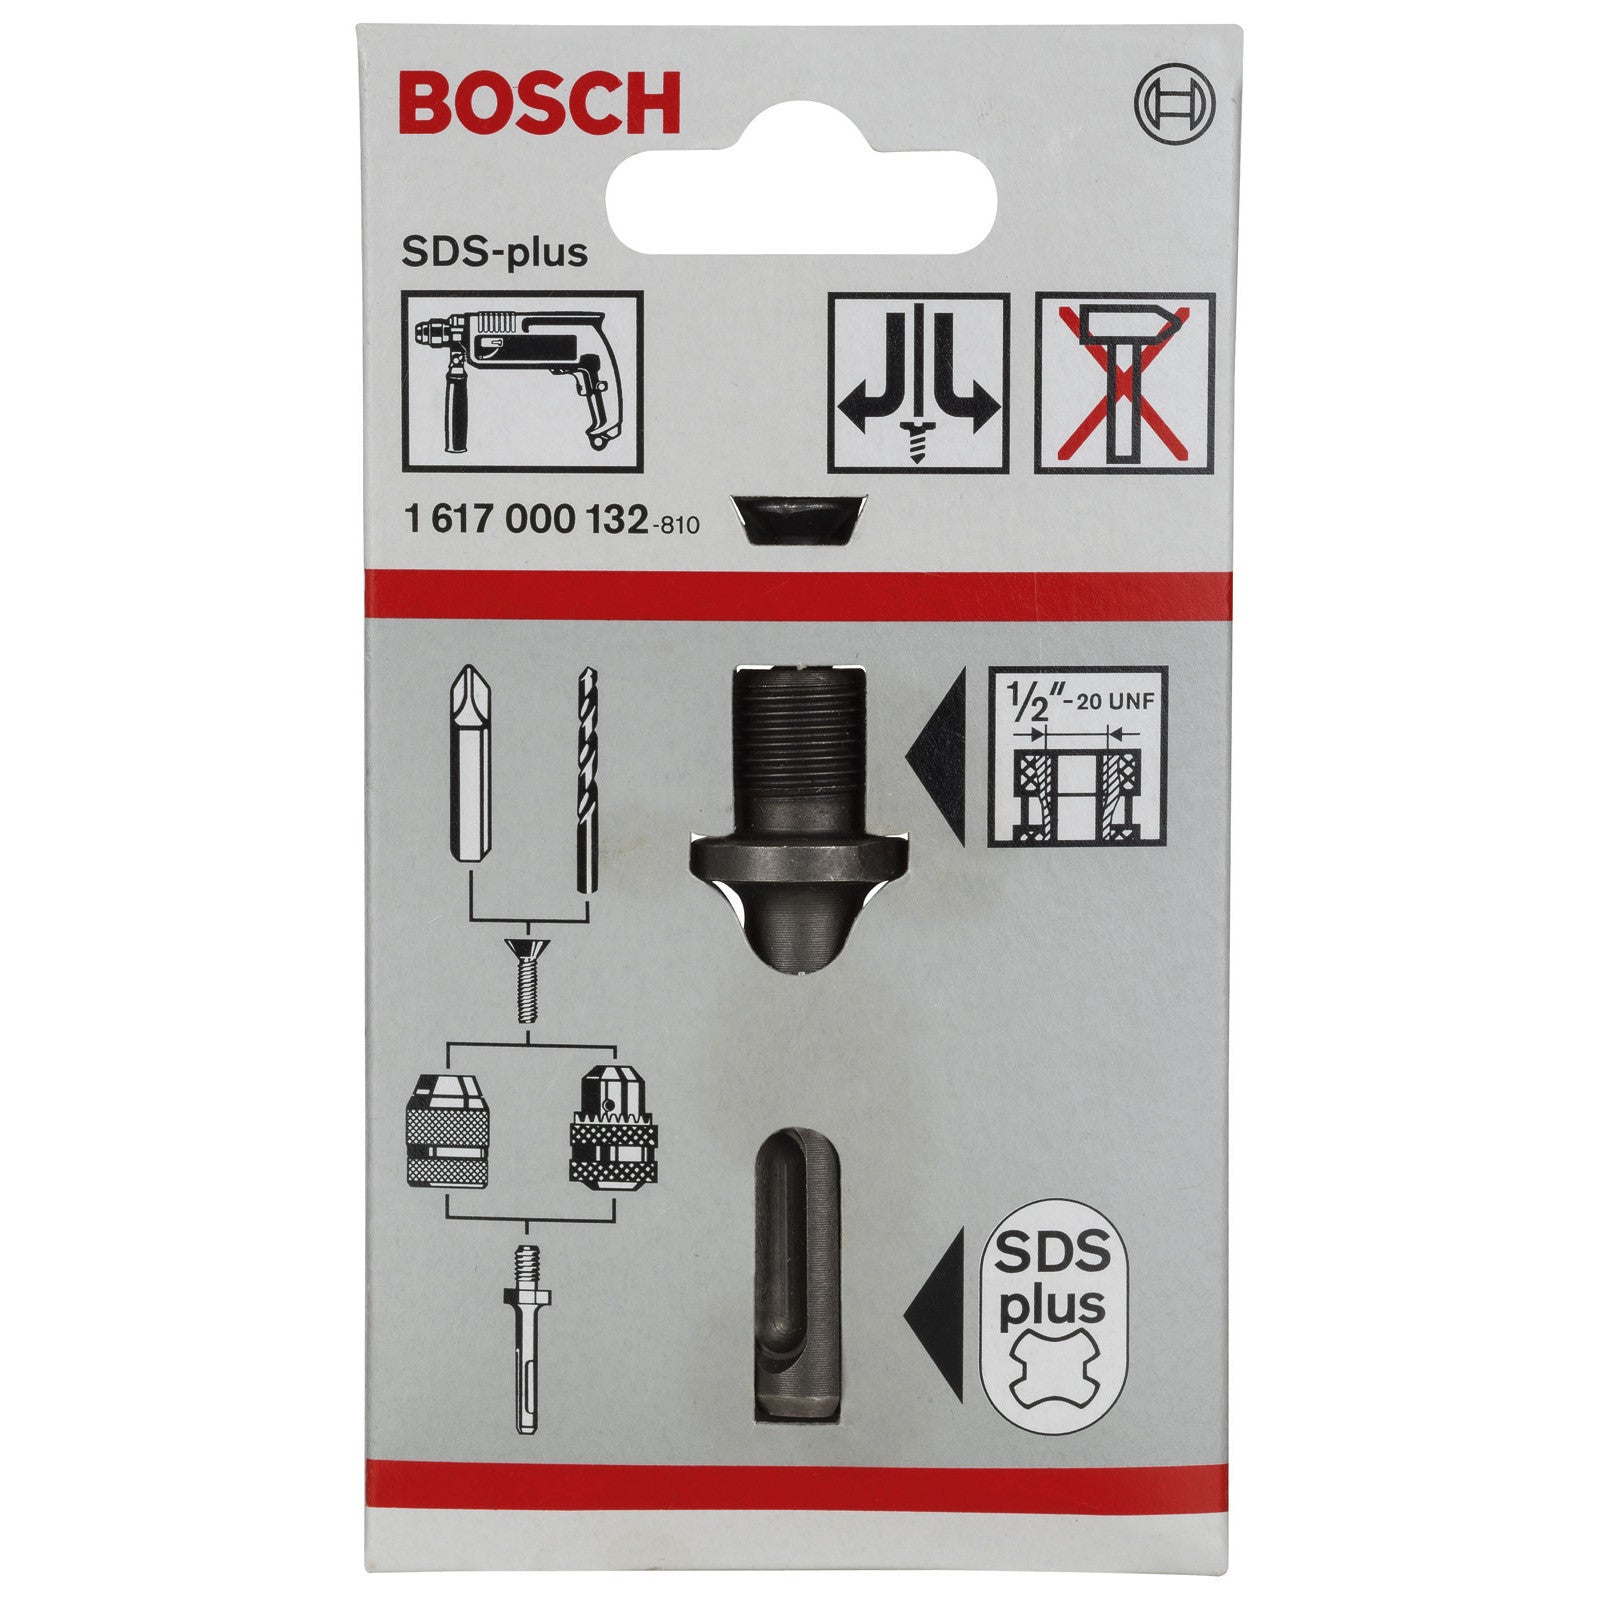 Bosch SDS-plus Chuck Adaptor for 062 Rev Chuck  1617000132 Power Tool Services